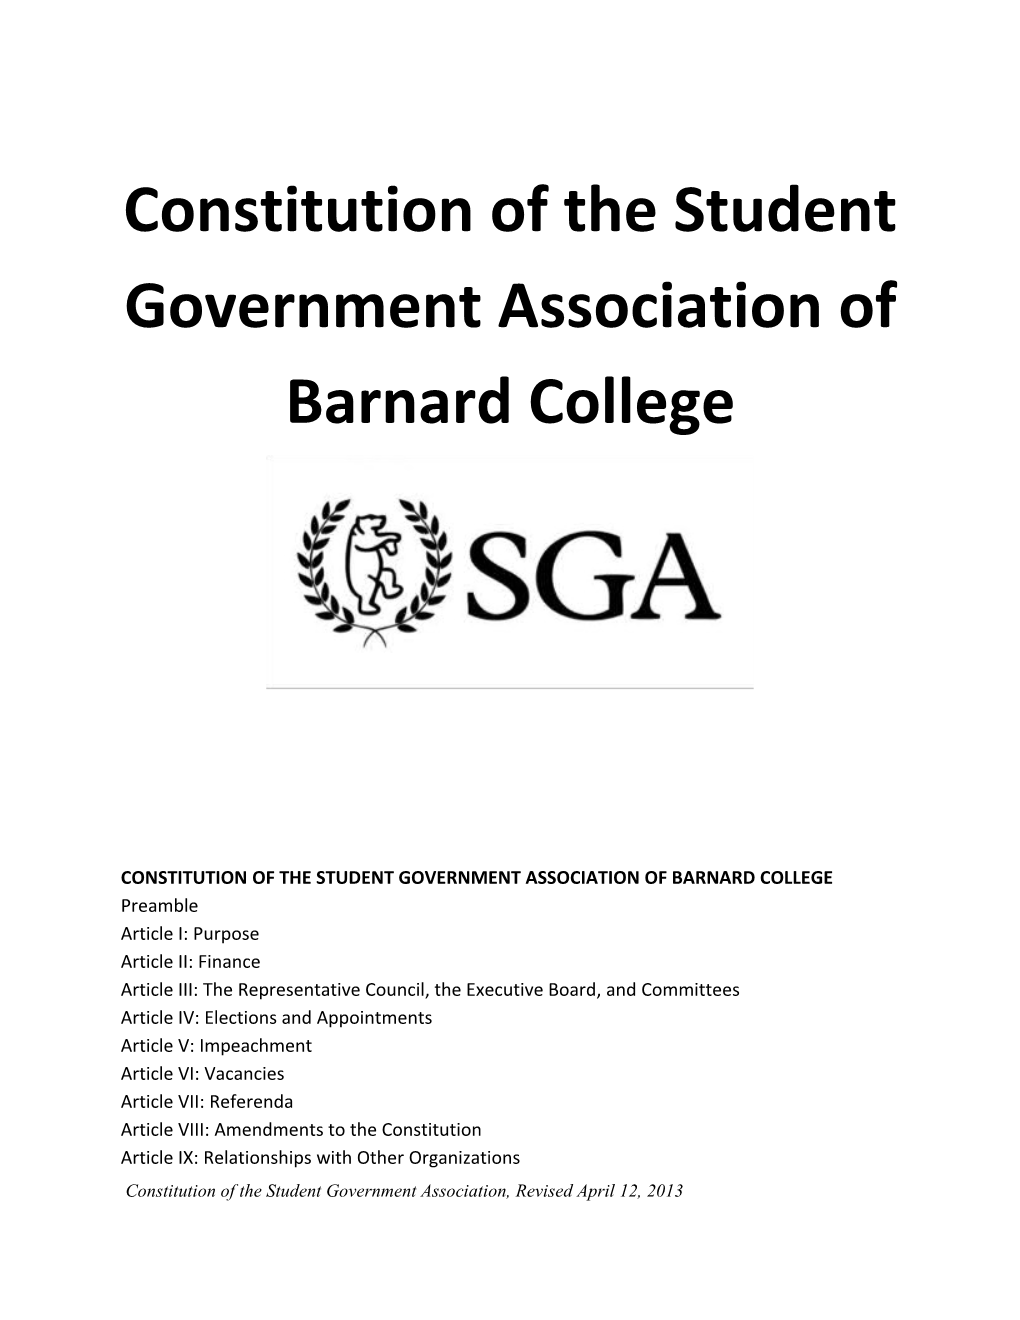 CRC Final Version of SGA Constitution 4.12.13